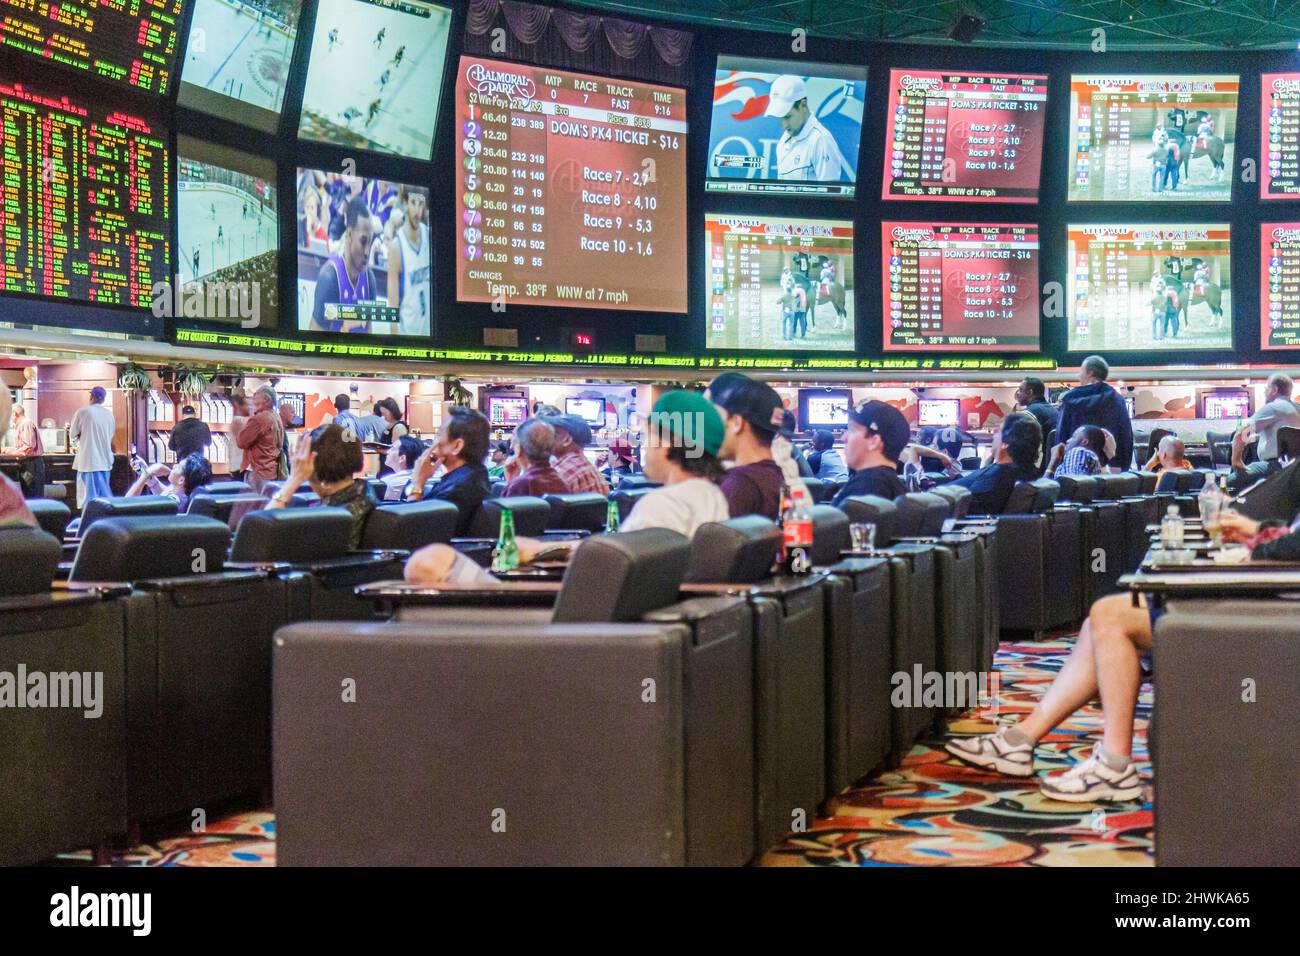 Las Vegas Nevada,Westgate Las Vegas Resort & Casino,sporting events sportsbook,betting odds gamblers gambling monitors live watching inside interior Stock Photo